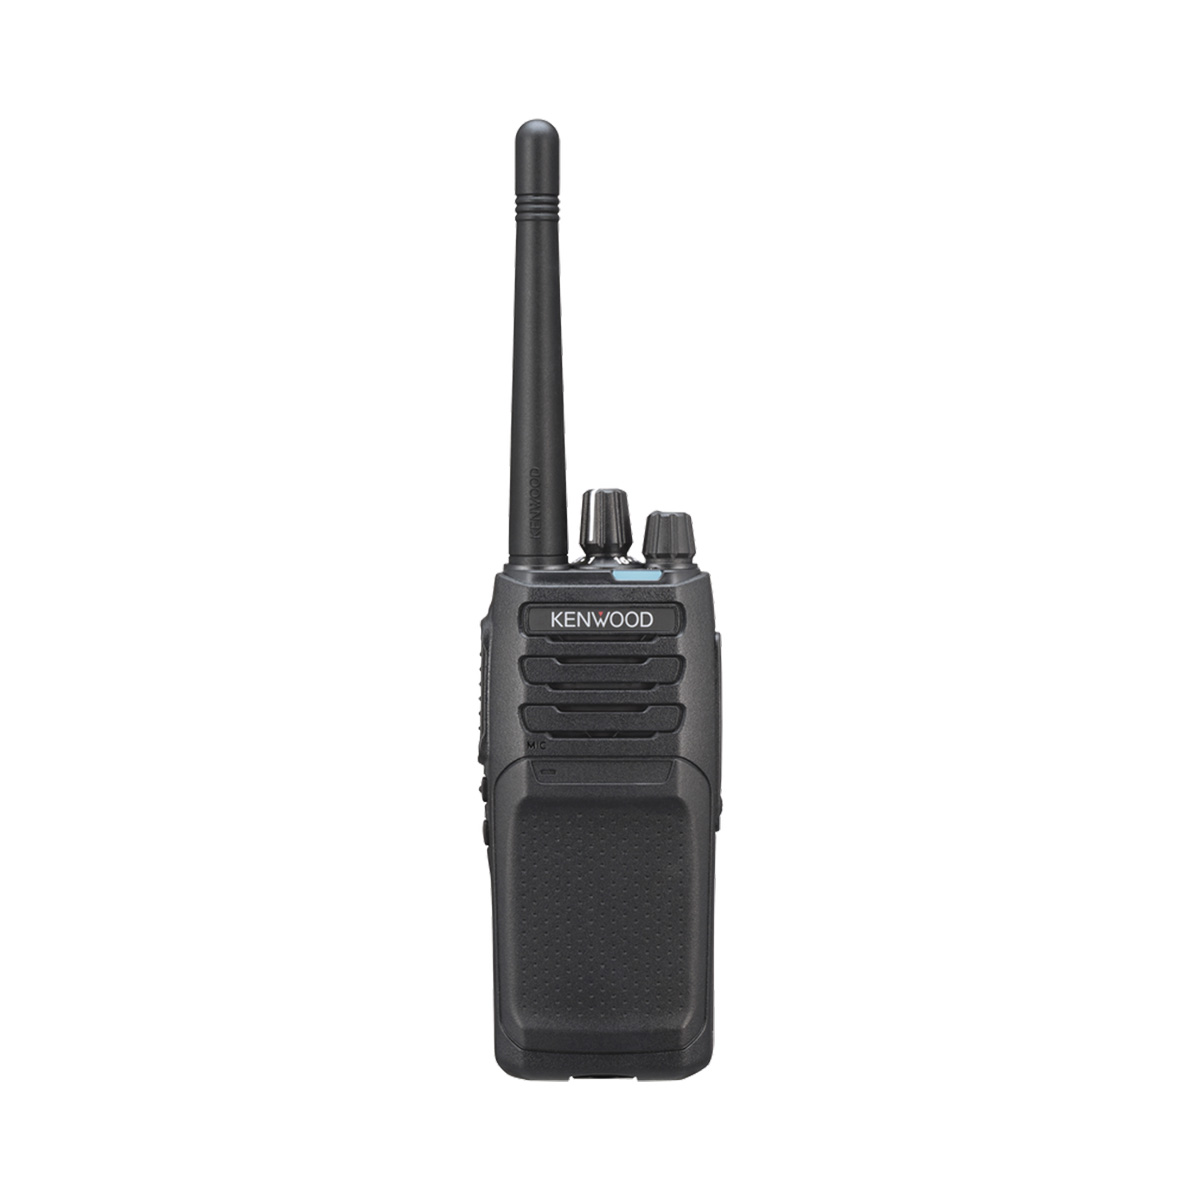 Radio KENWOOD NX-1200-DK Digital VHF 136-174 MHz sin pantalla y sin teclado